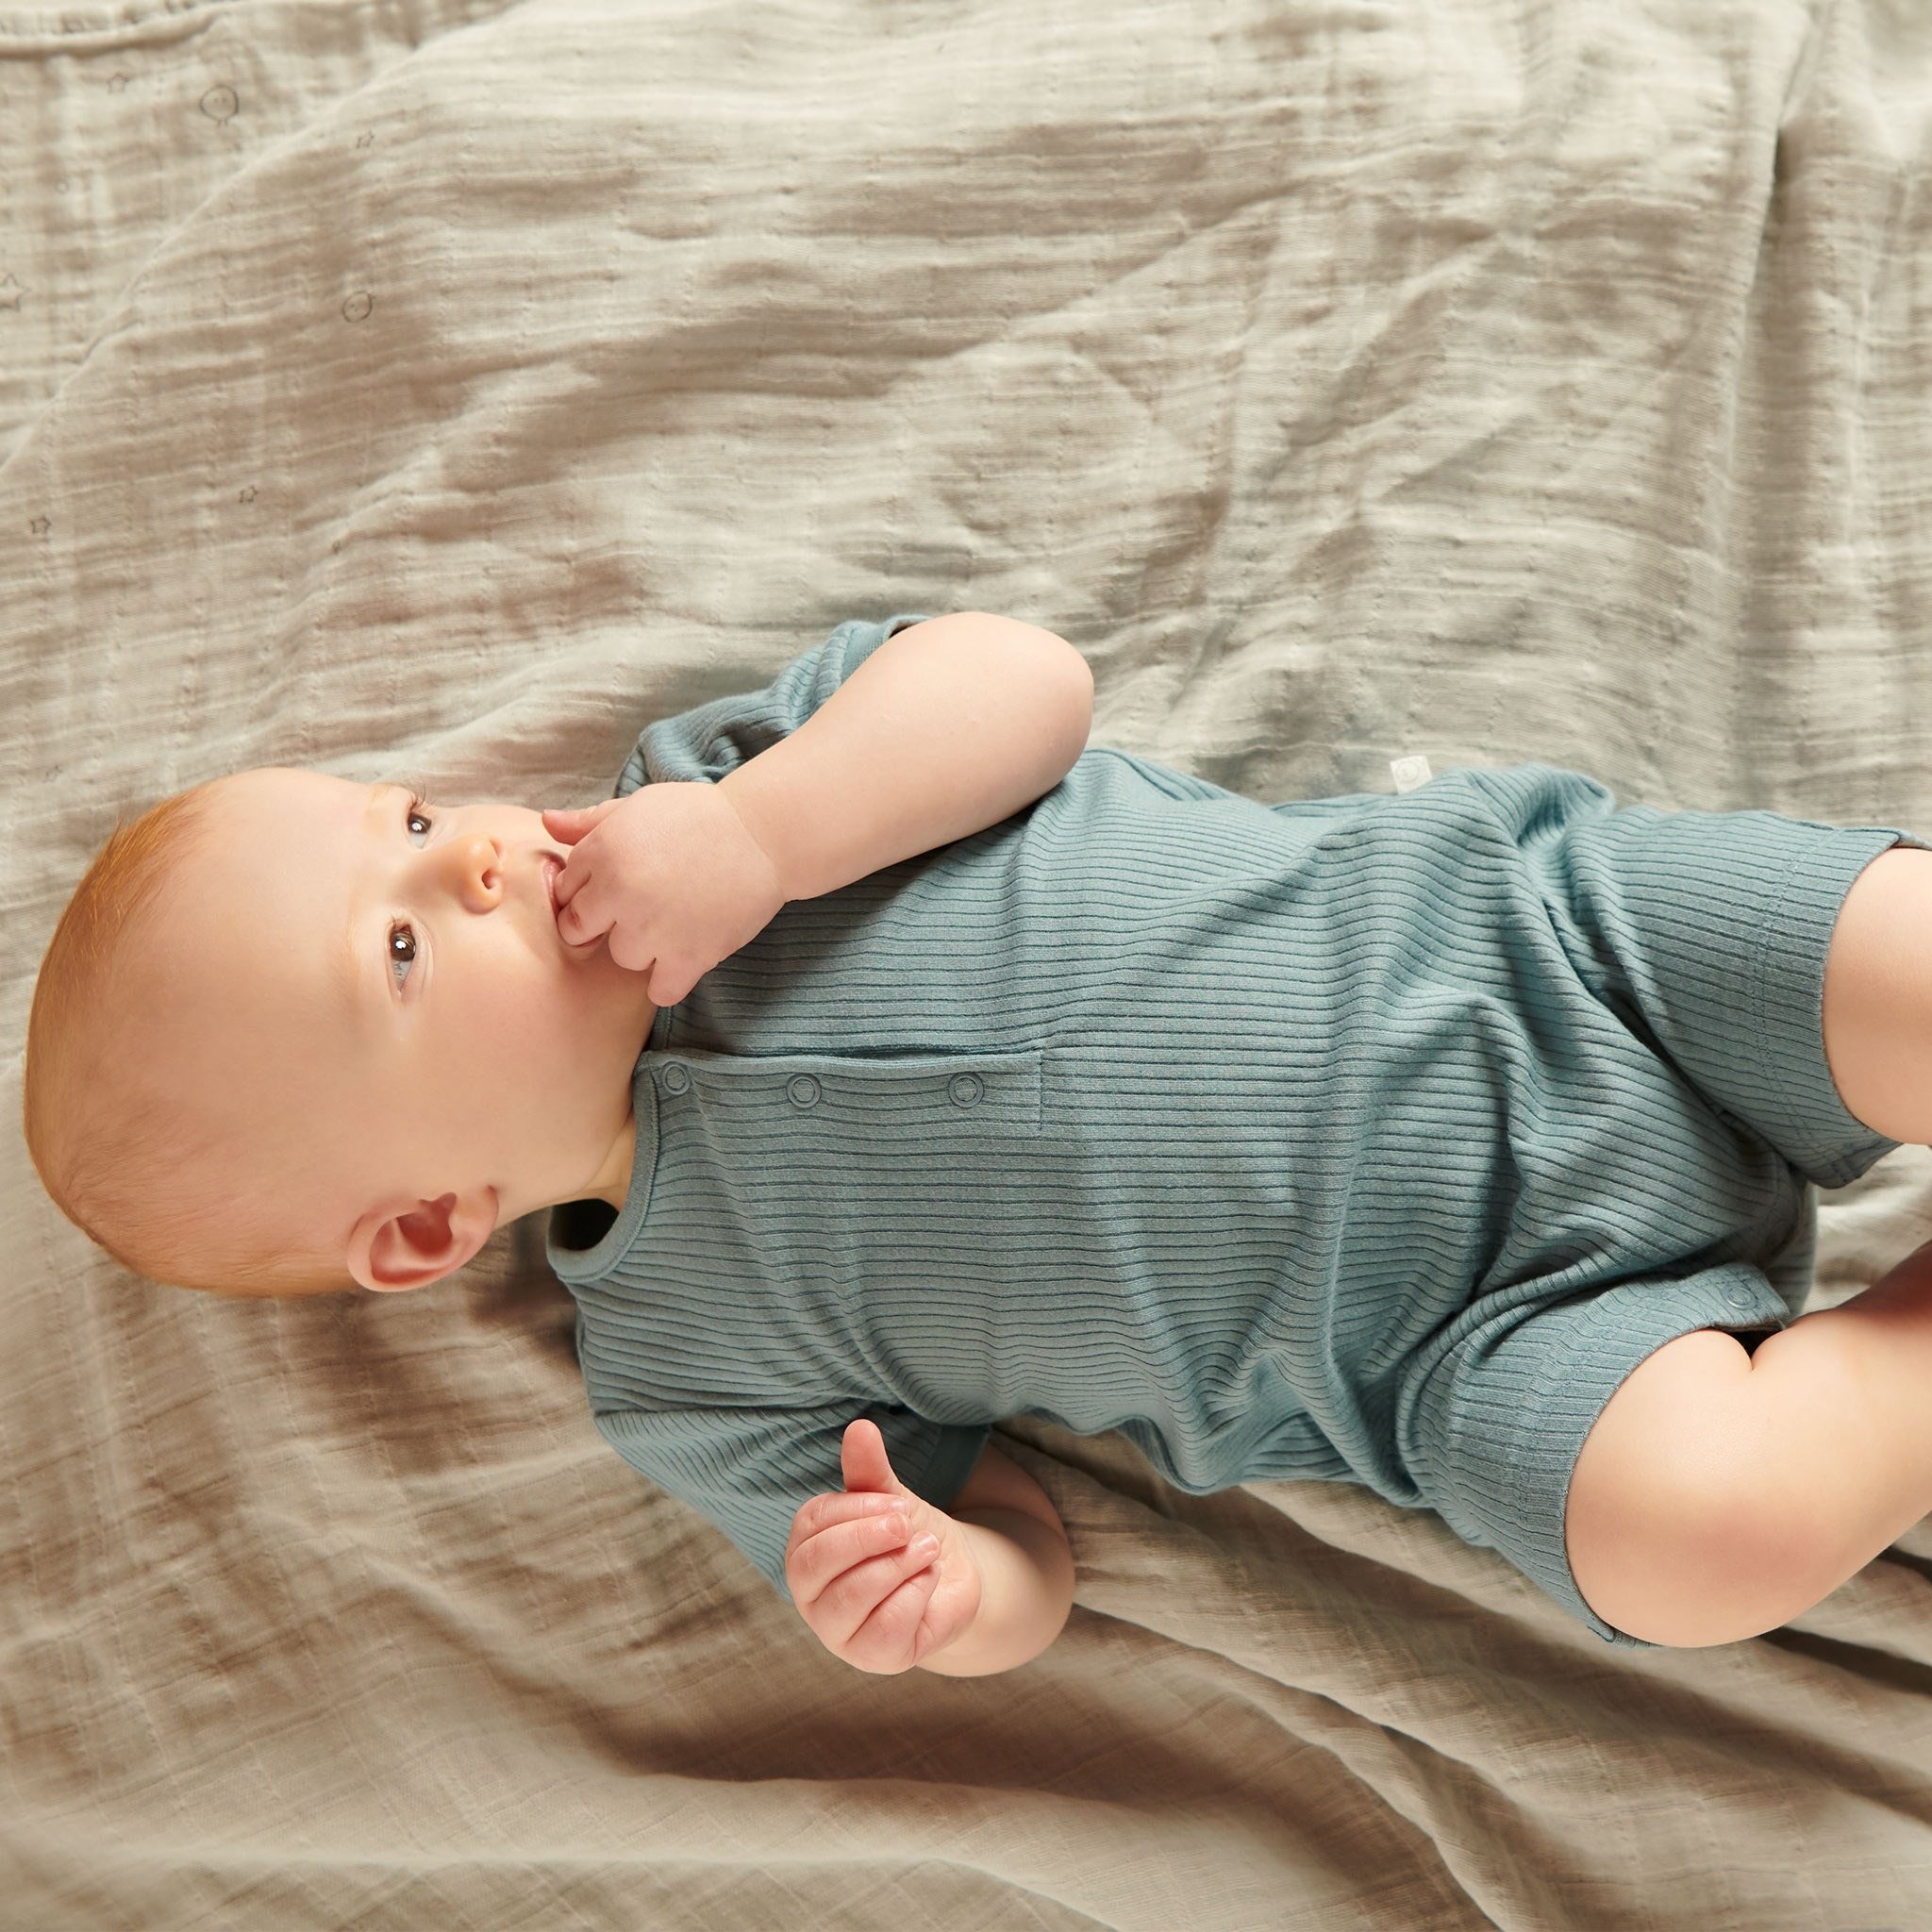 III. Factors to Consider When Choosing Sleepwear for Babies